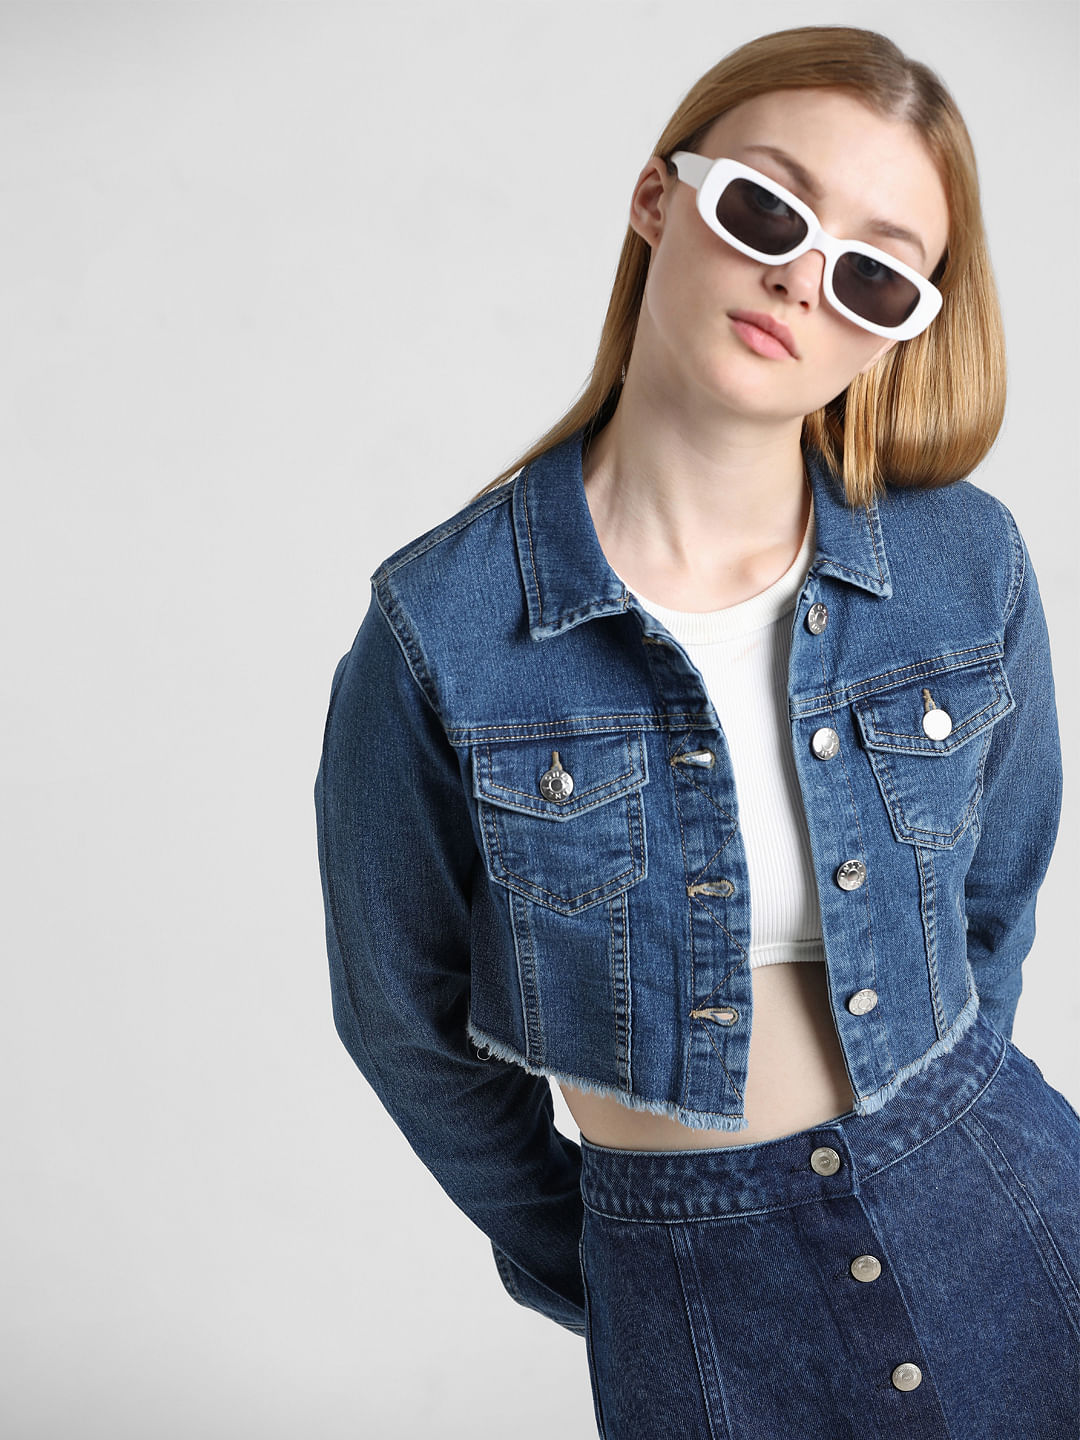 Buy Buynewtrend curvy Solid Button-Closure Women Plus Size Denim Jacket  (3XL, Light Blue) at Amazon.in